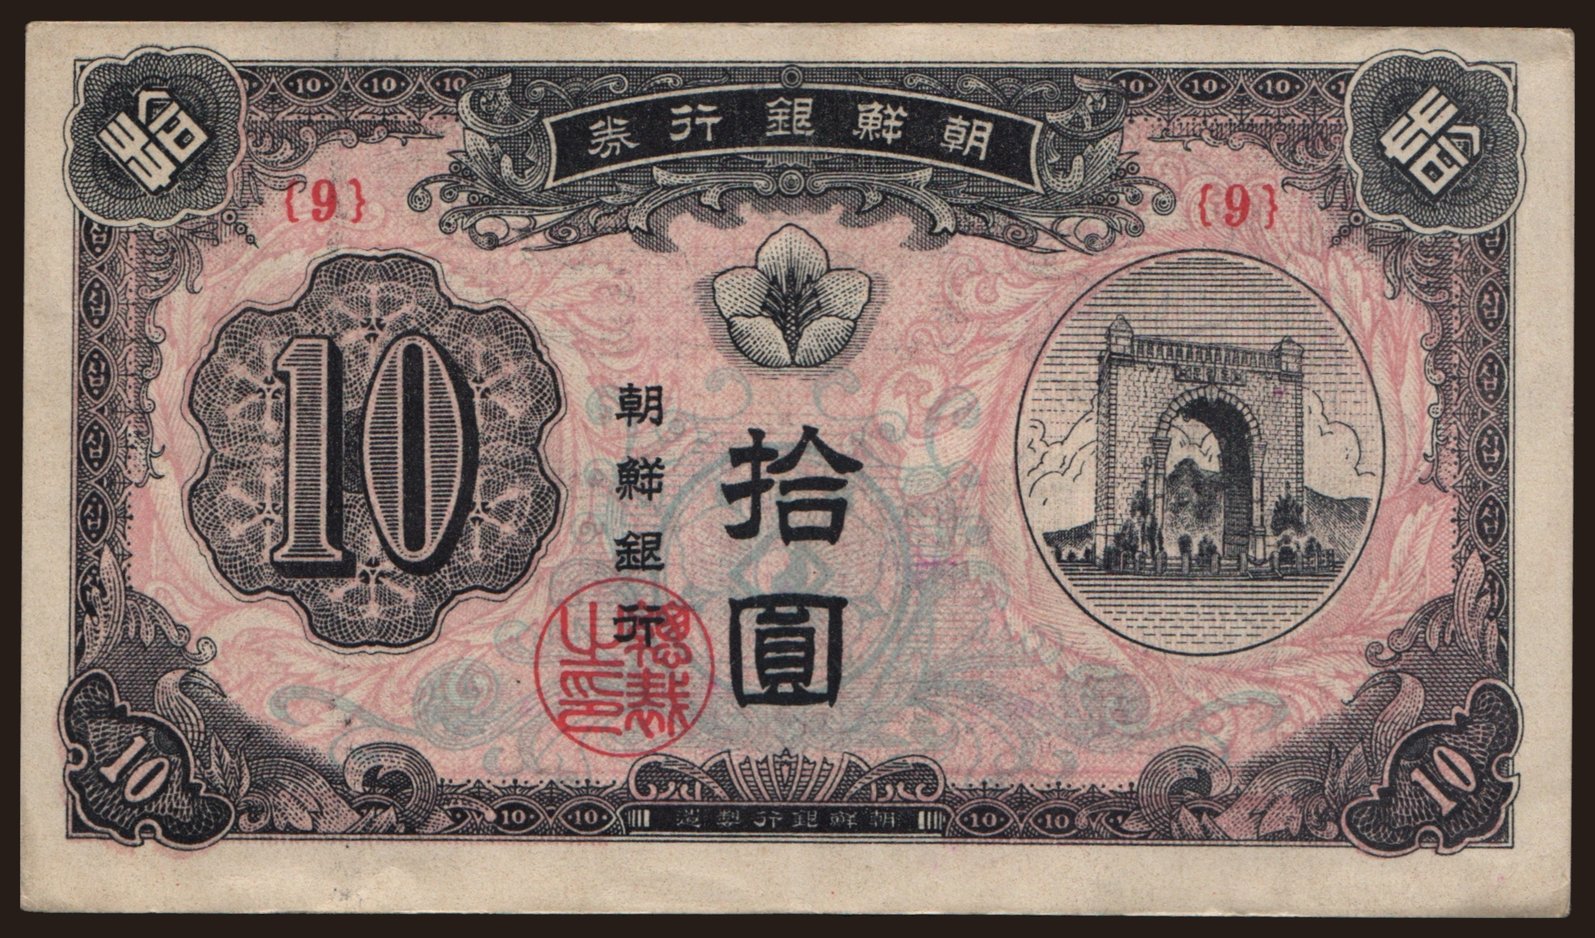 10 won, 1949